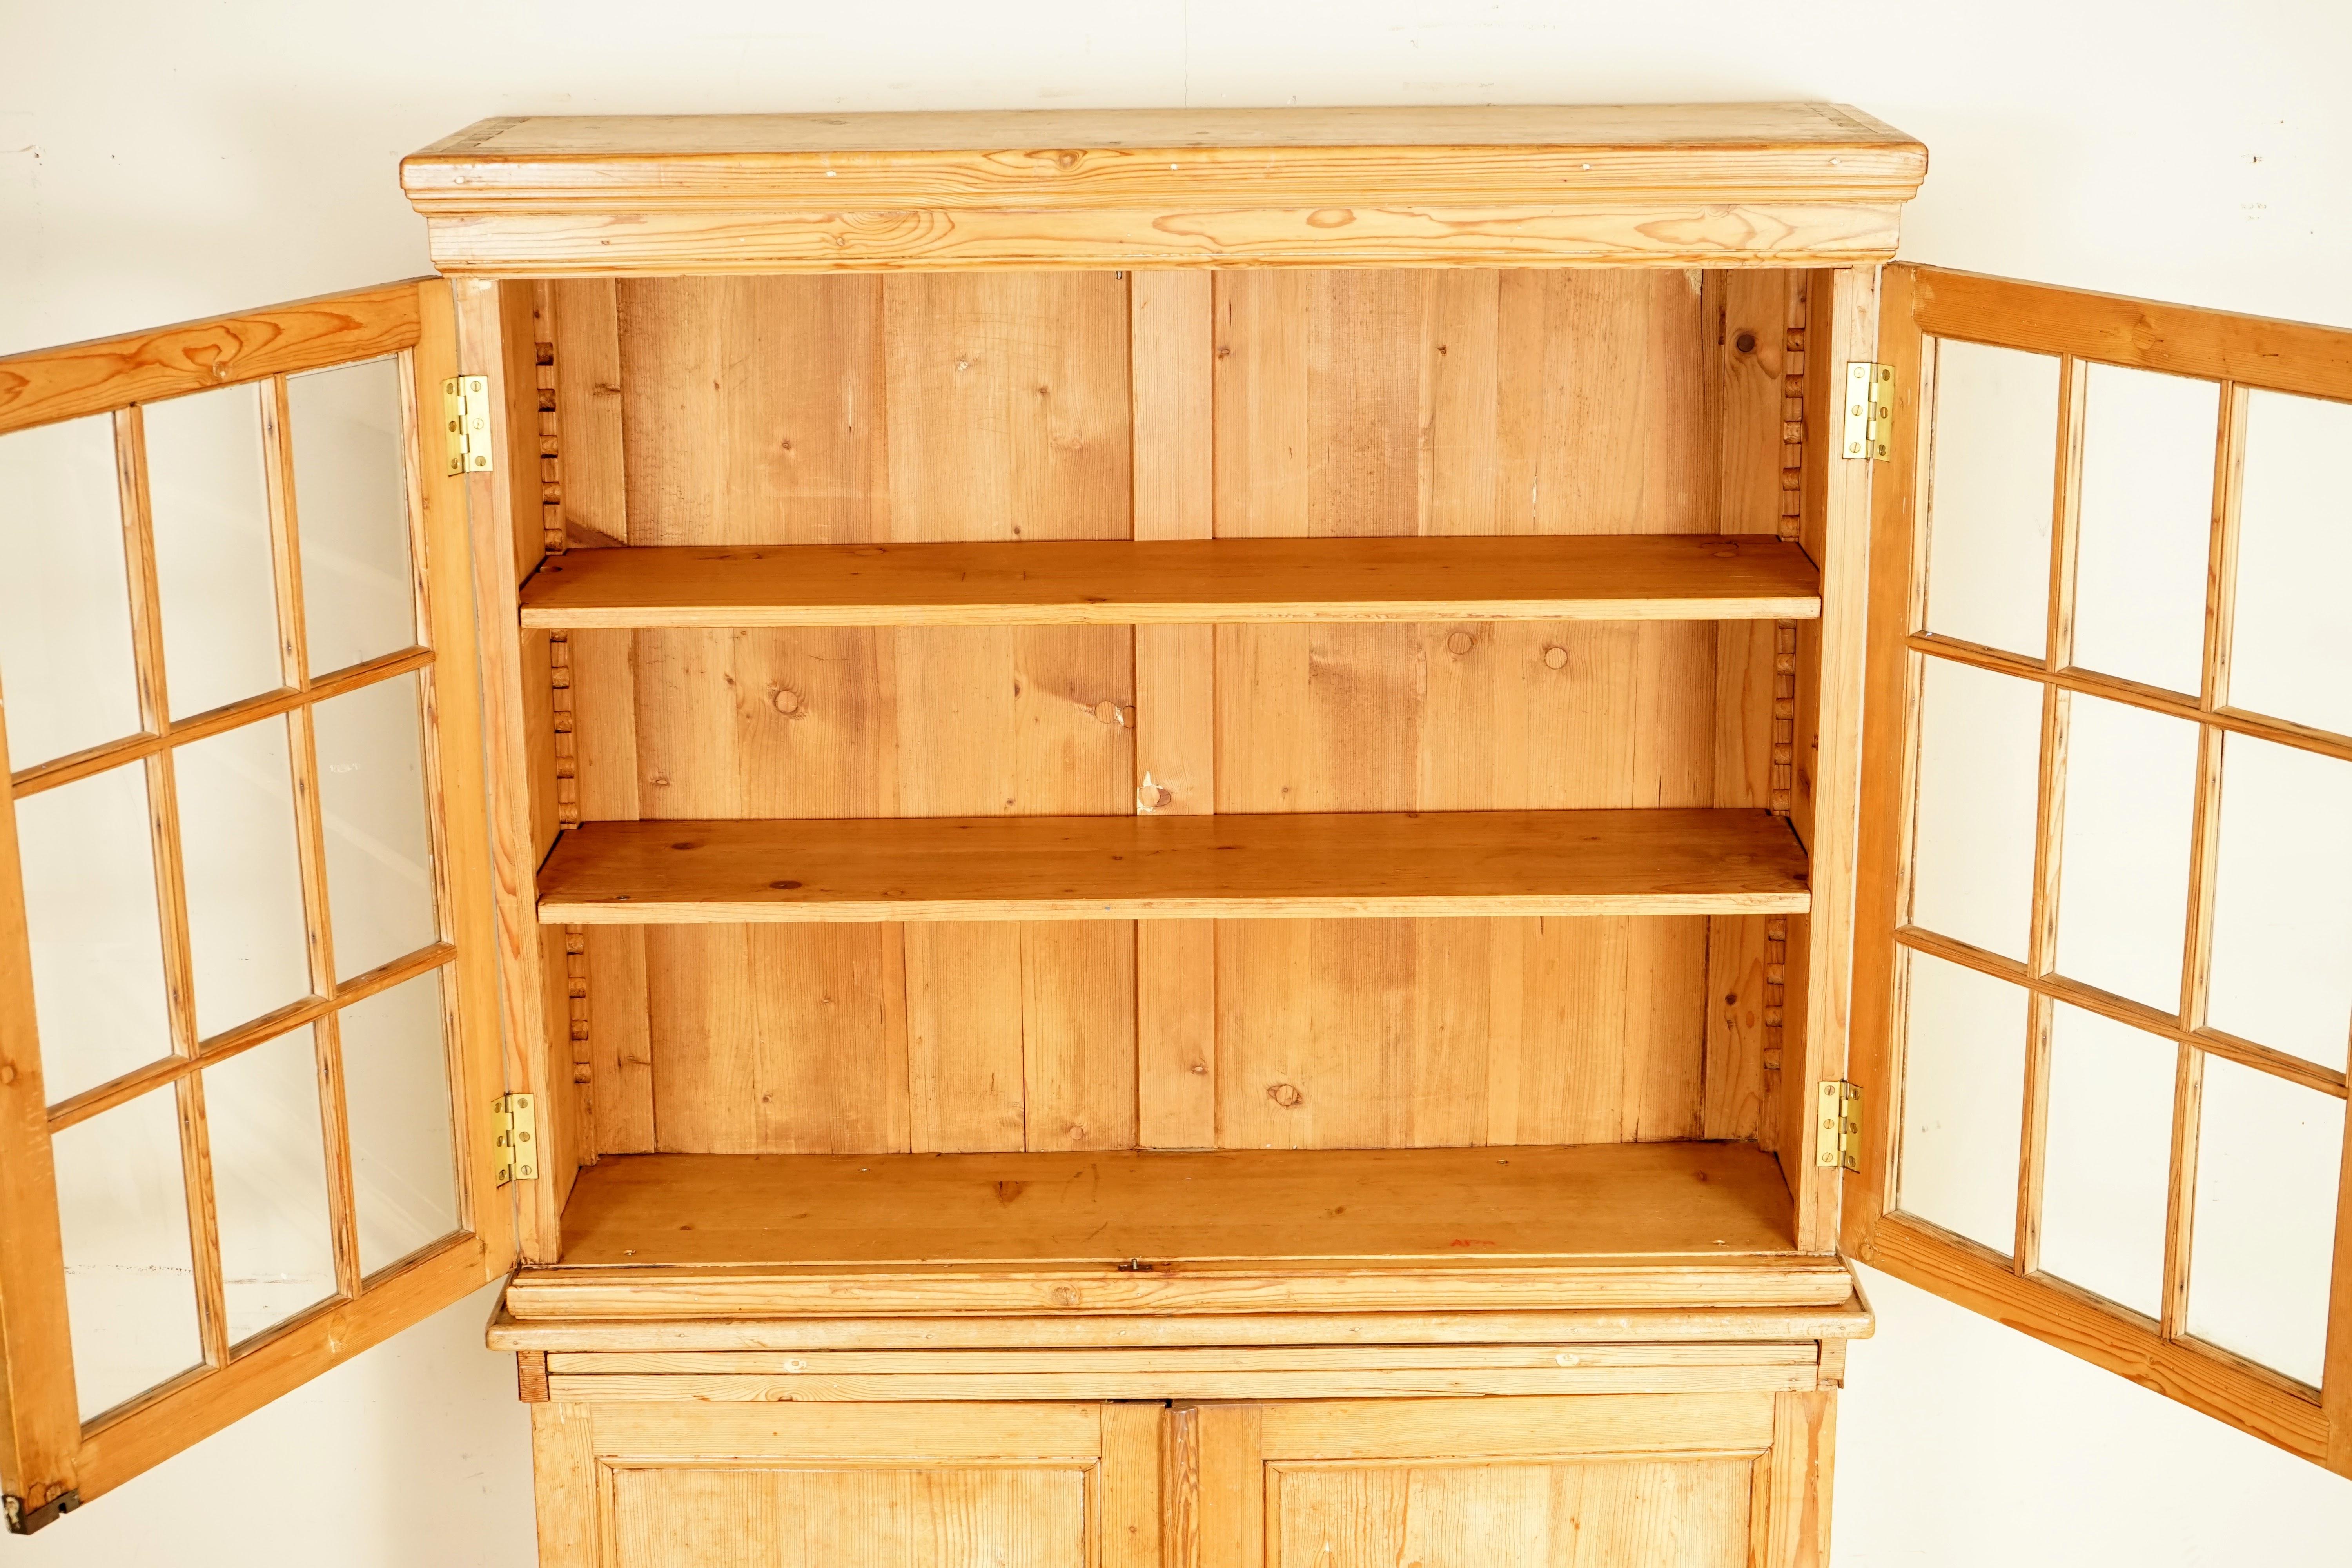 Rare Antique German Pine Kitchen Cabinet with Adjustable Shelves 1